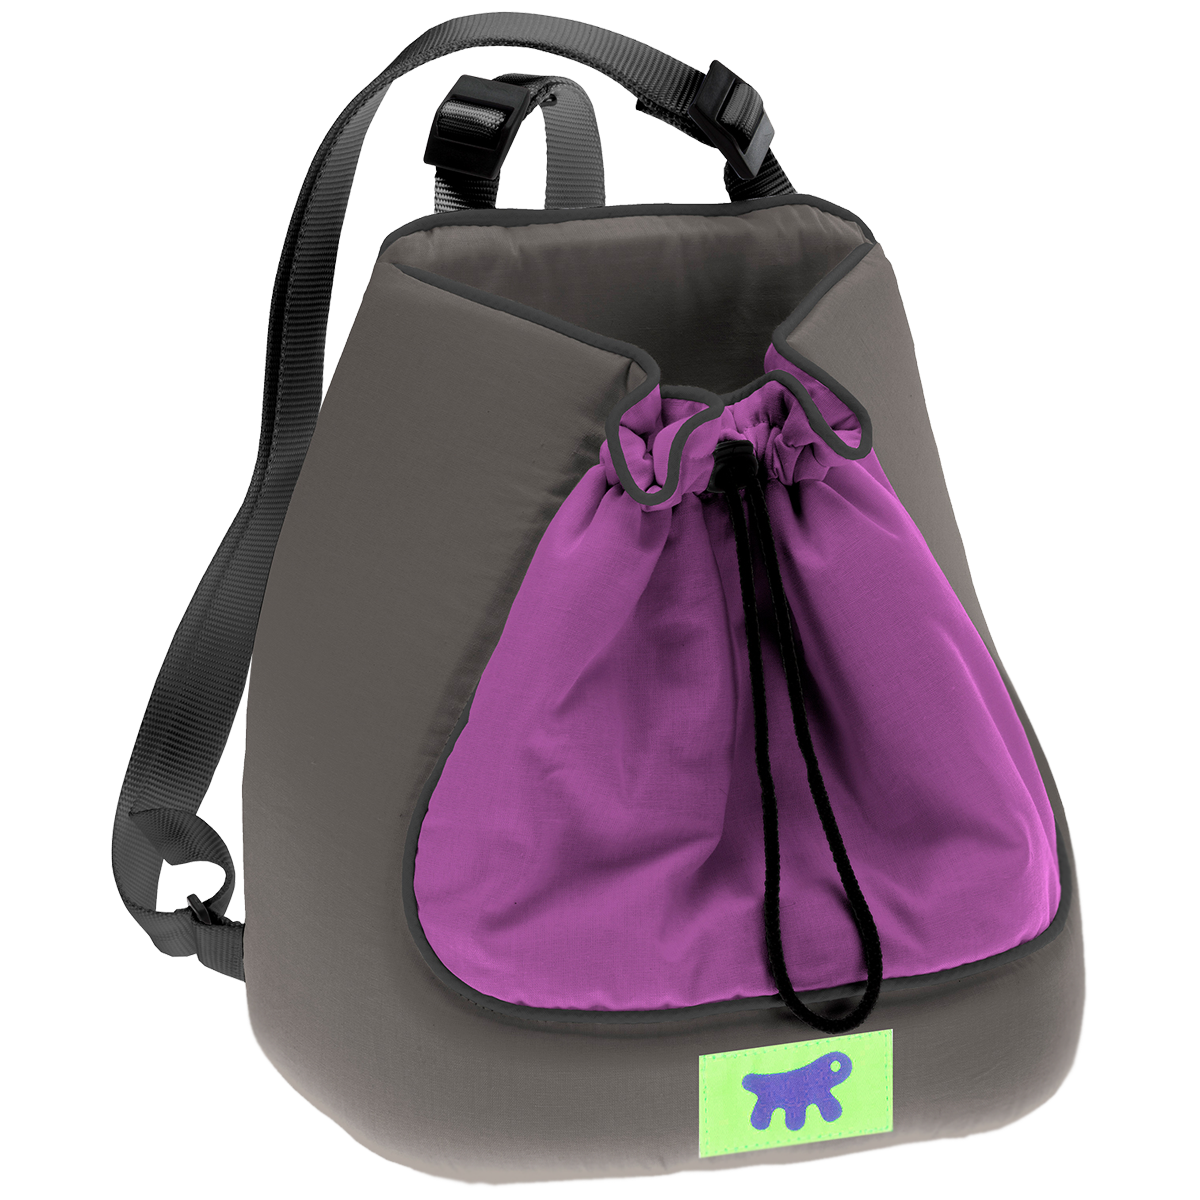 Ferplast Сумка-рюкзак TRIP 1 для собак и кошек